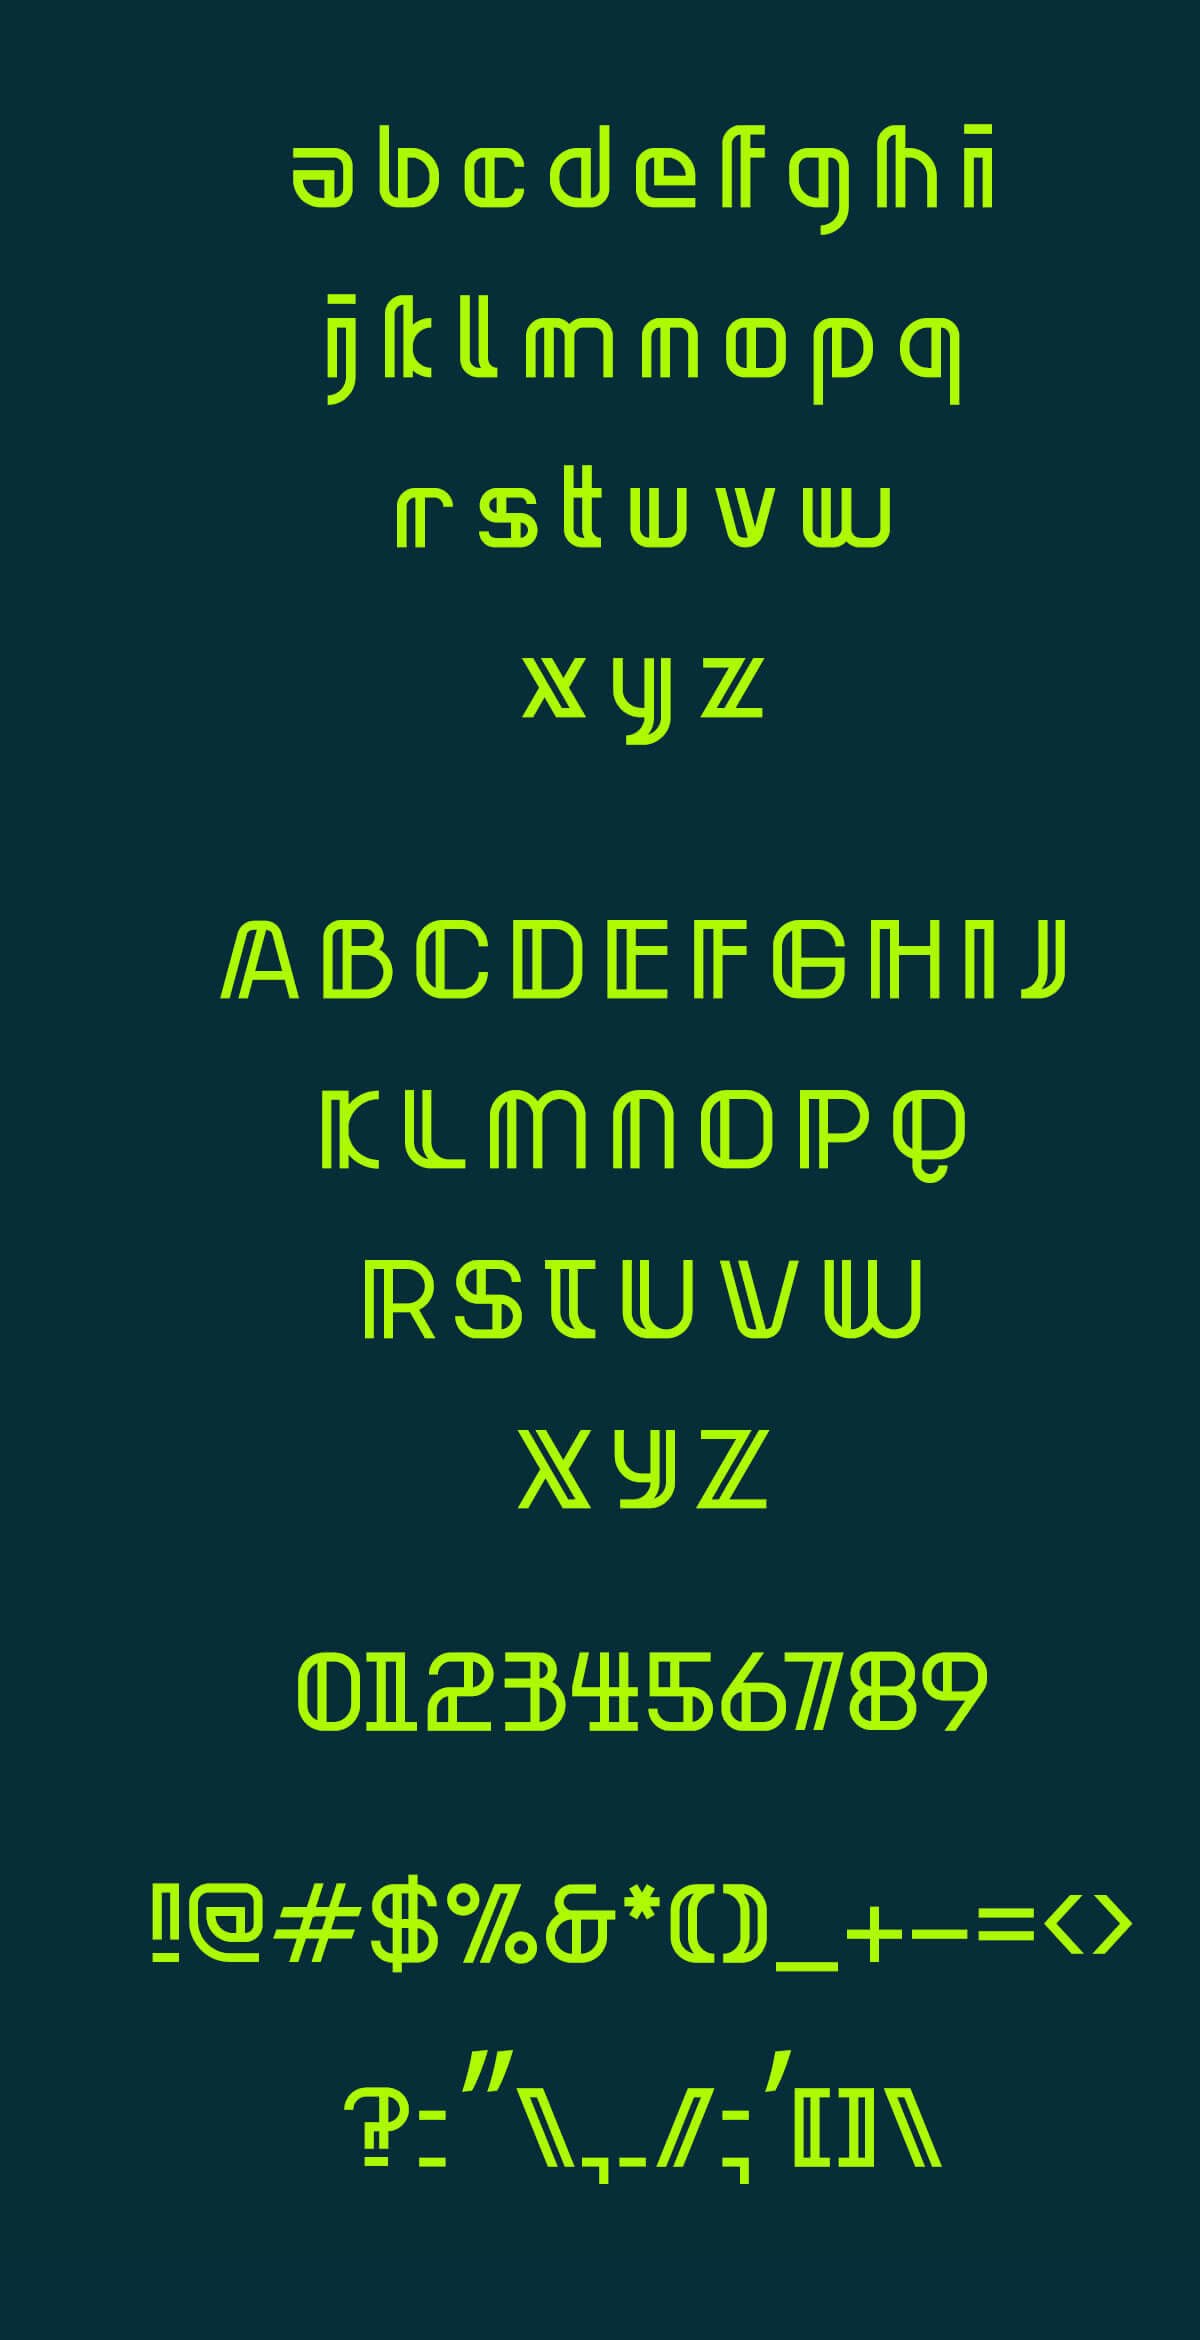 Free Neonclipper Art Deco Typeface